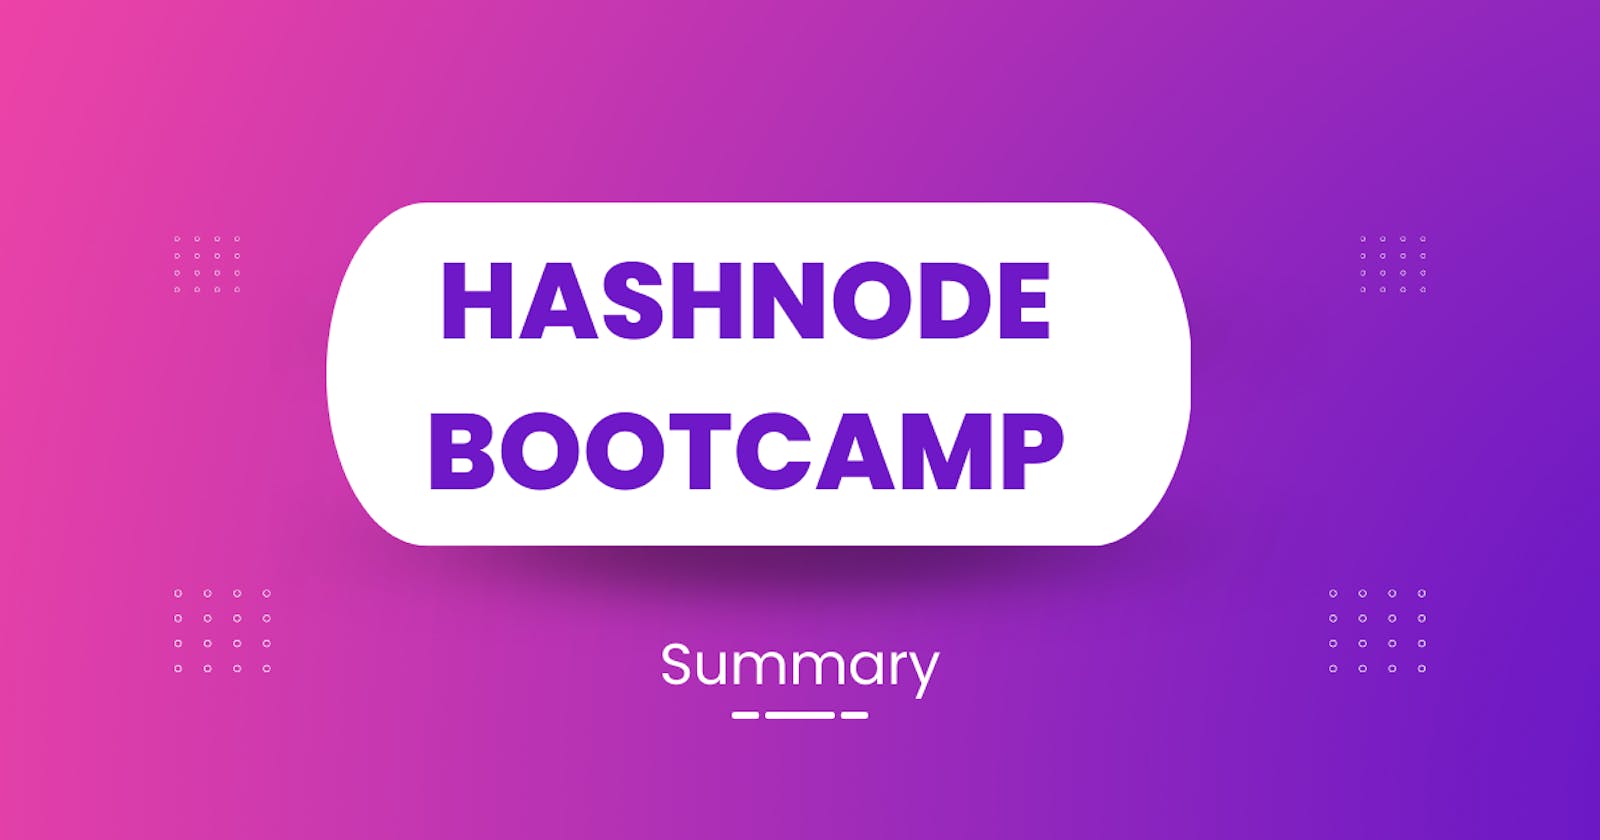 Summarising Hashnode Bootcamp